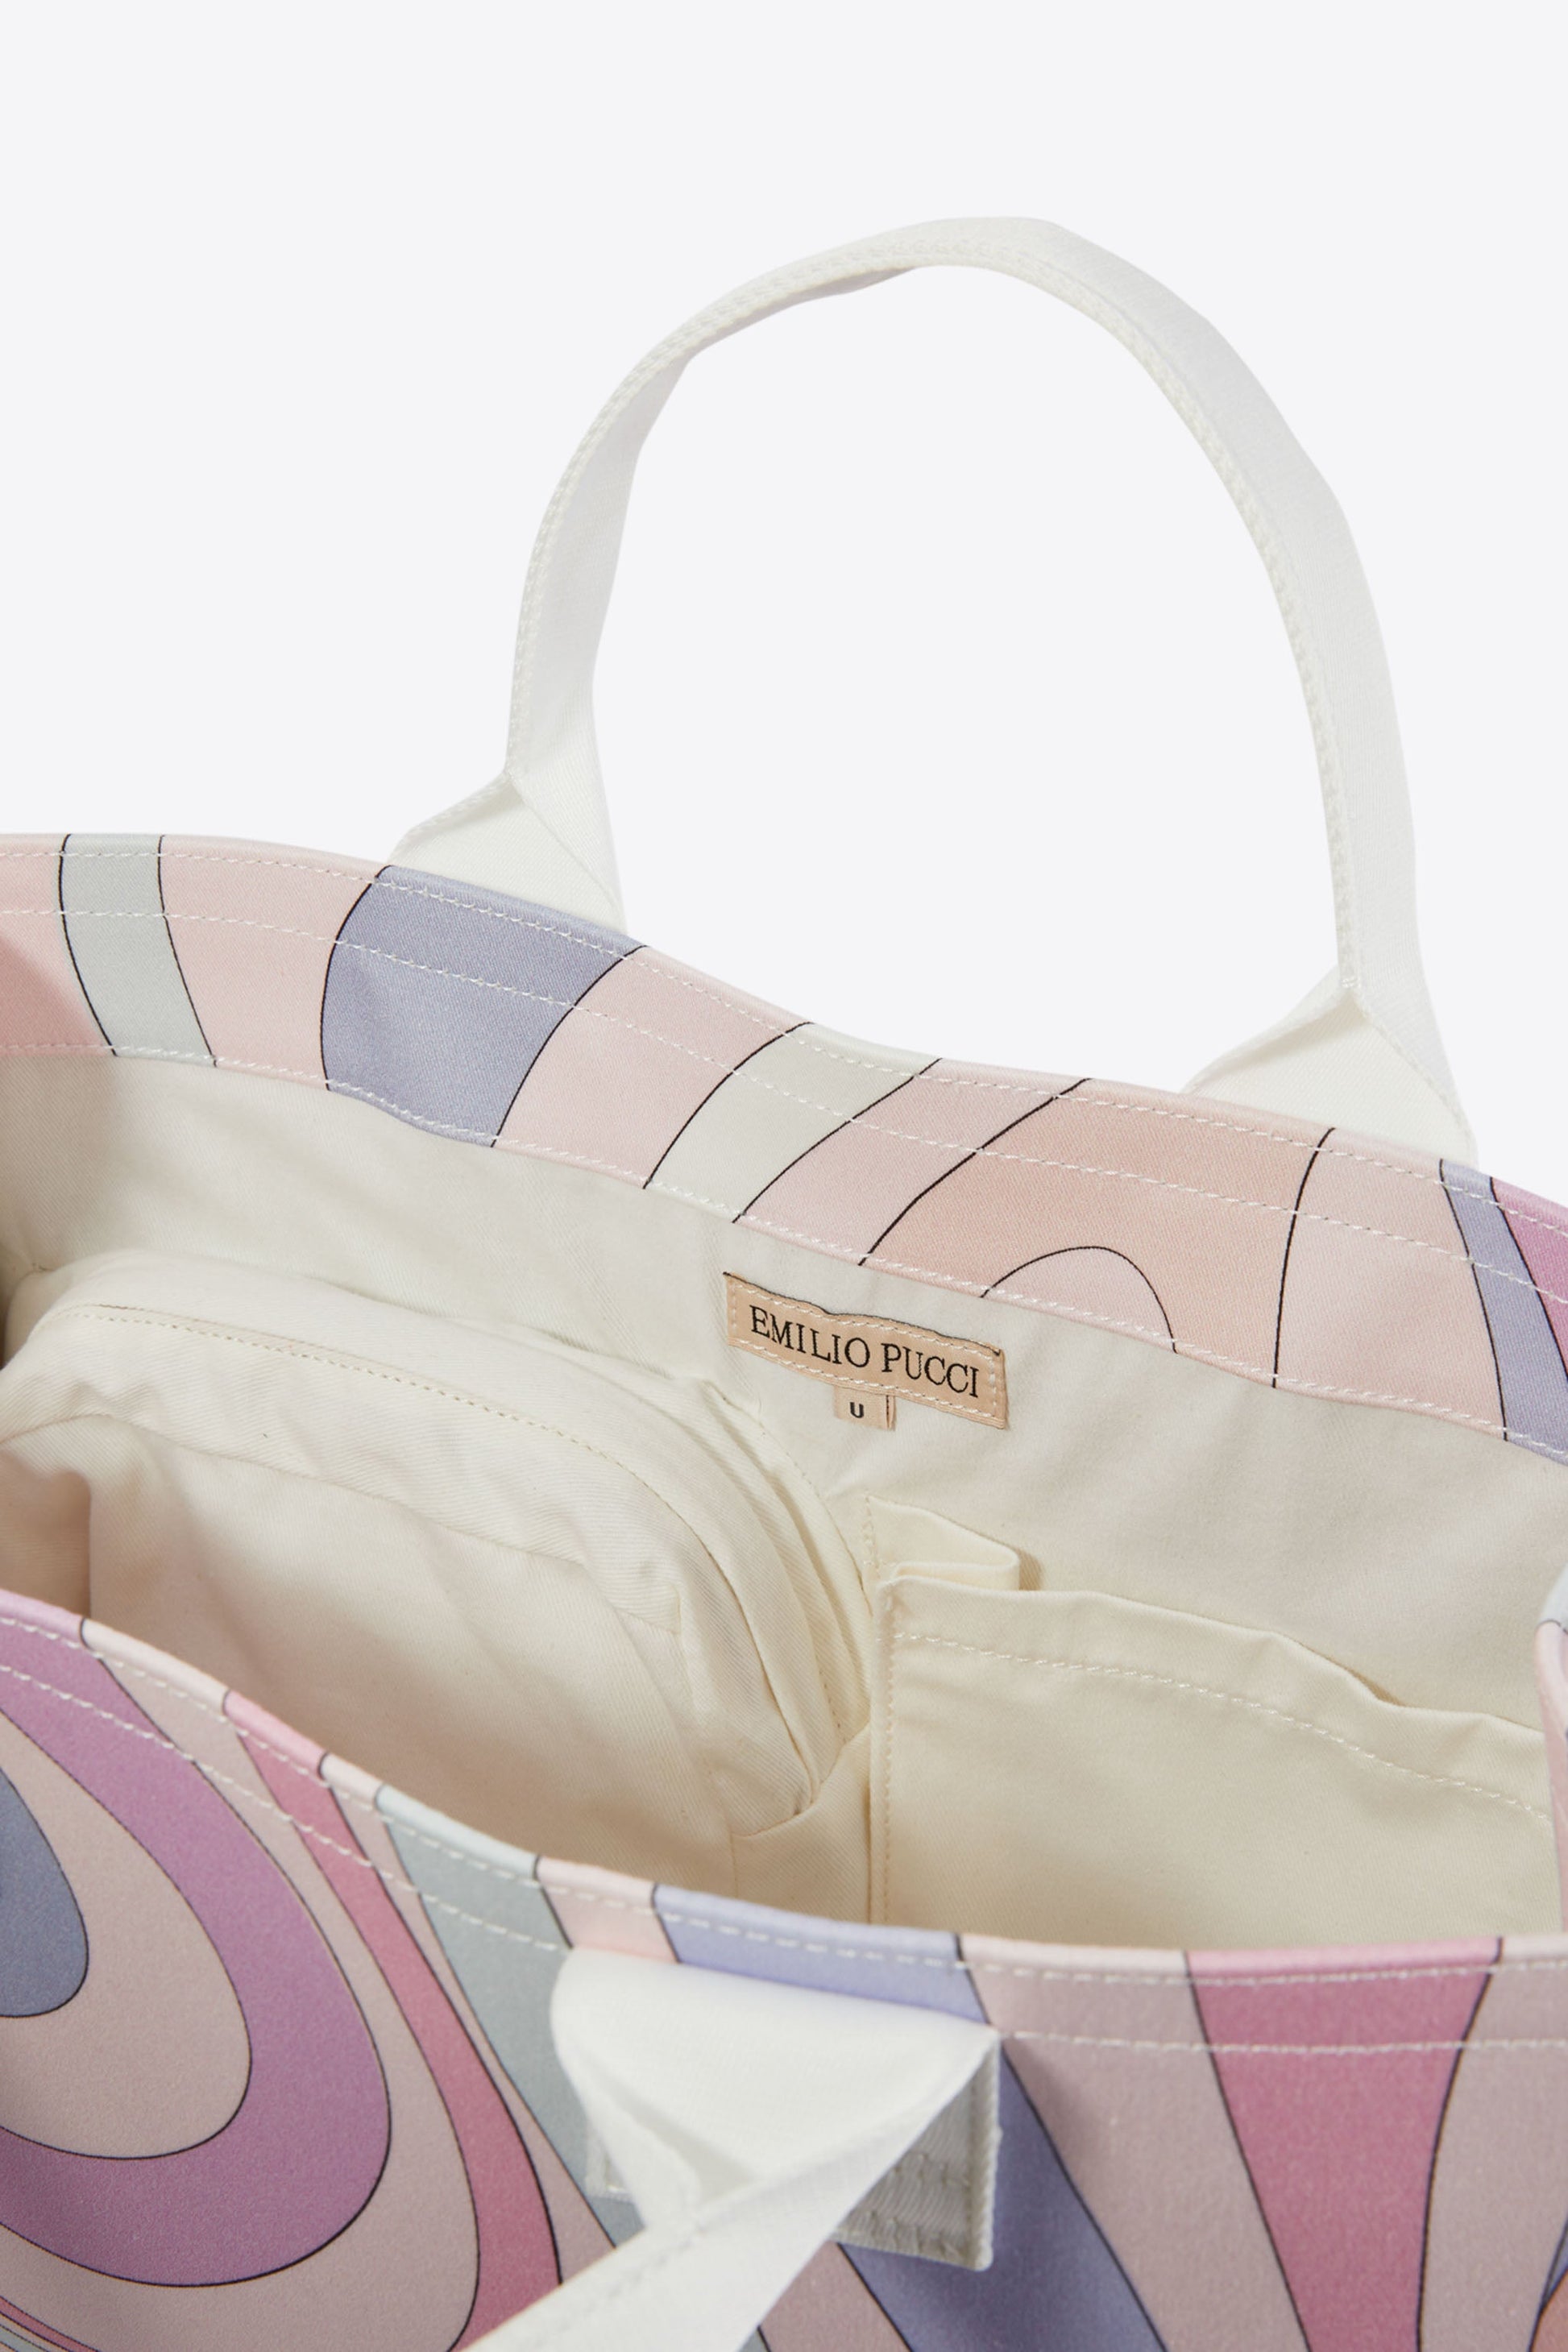 EMILIO PUCCI, Pink Women's Handbag